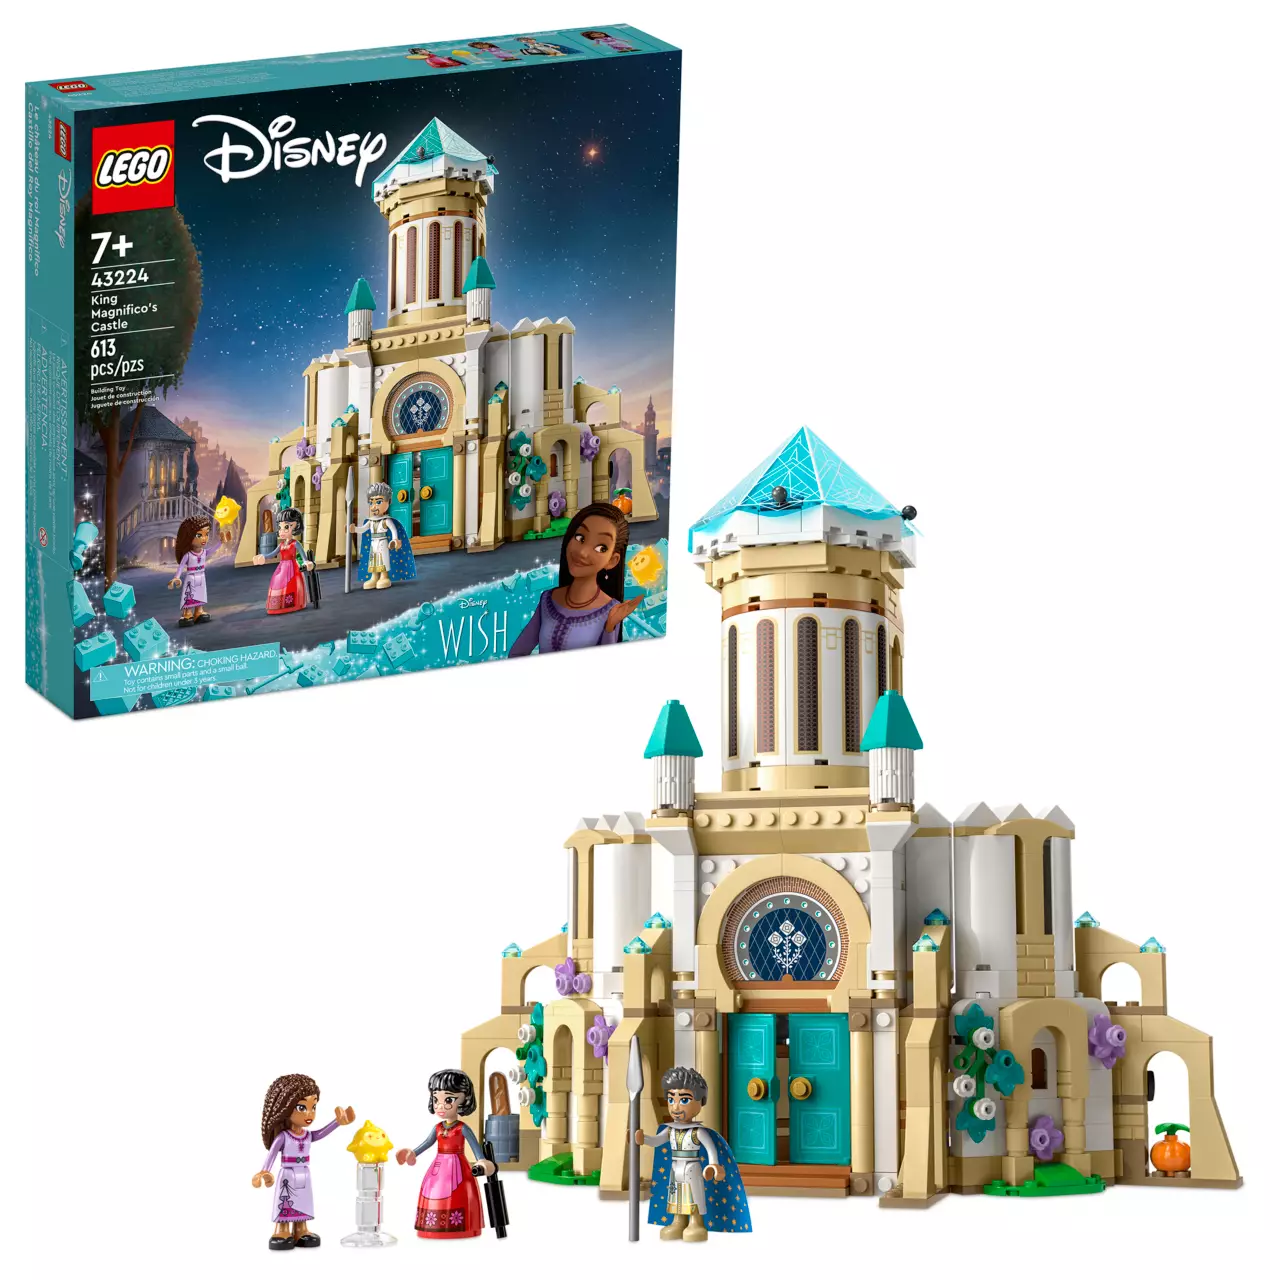 Disney's Wish LEGO King Magnifico's Castle – 43224